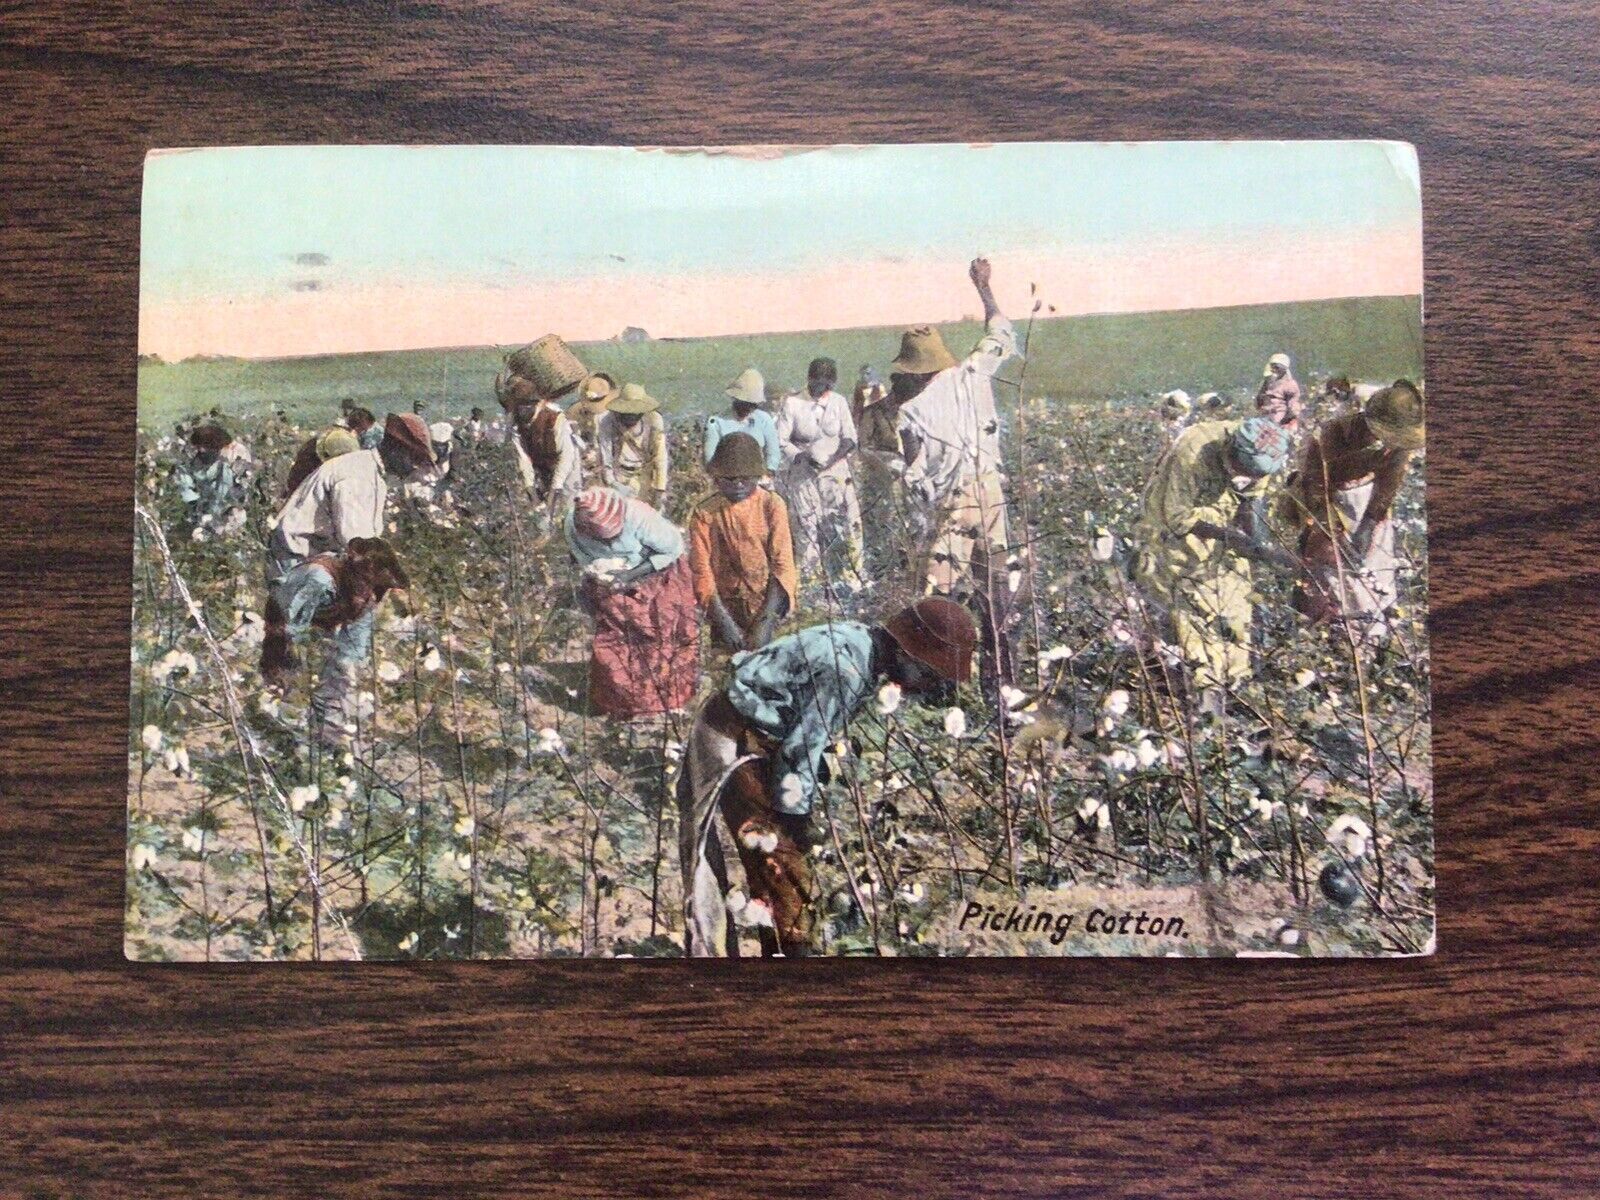 Vintage 1912 Florida Postcard “Picking Cotton” African Americans Picking Cotton